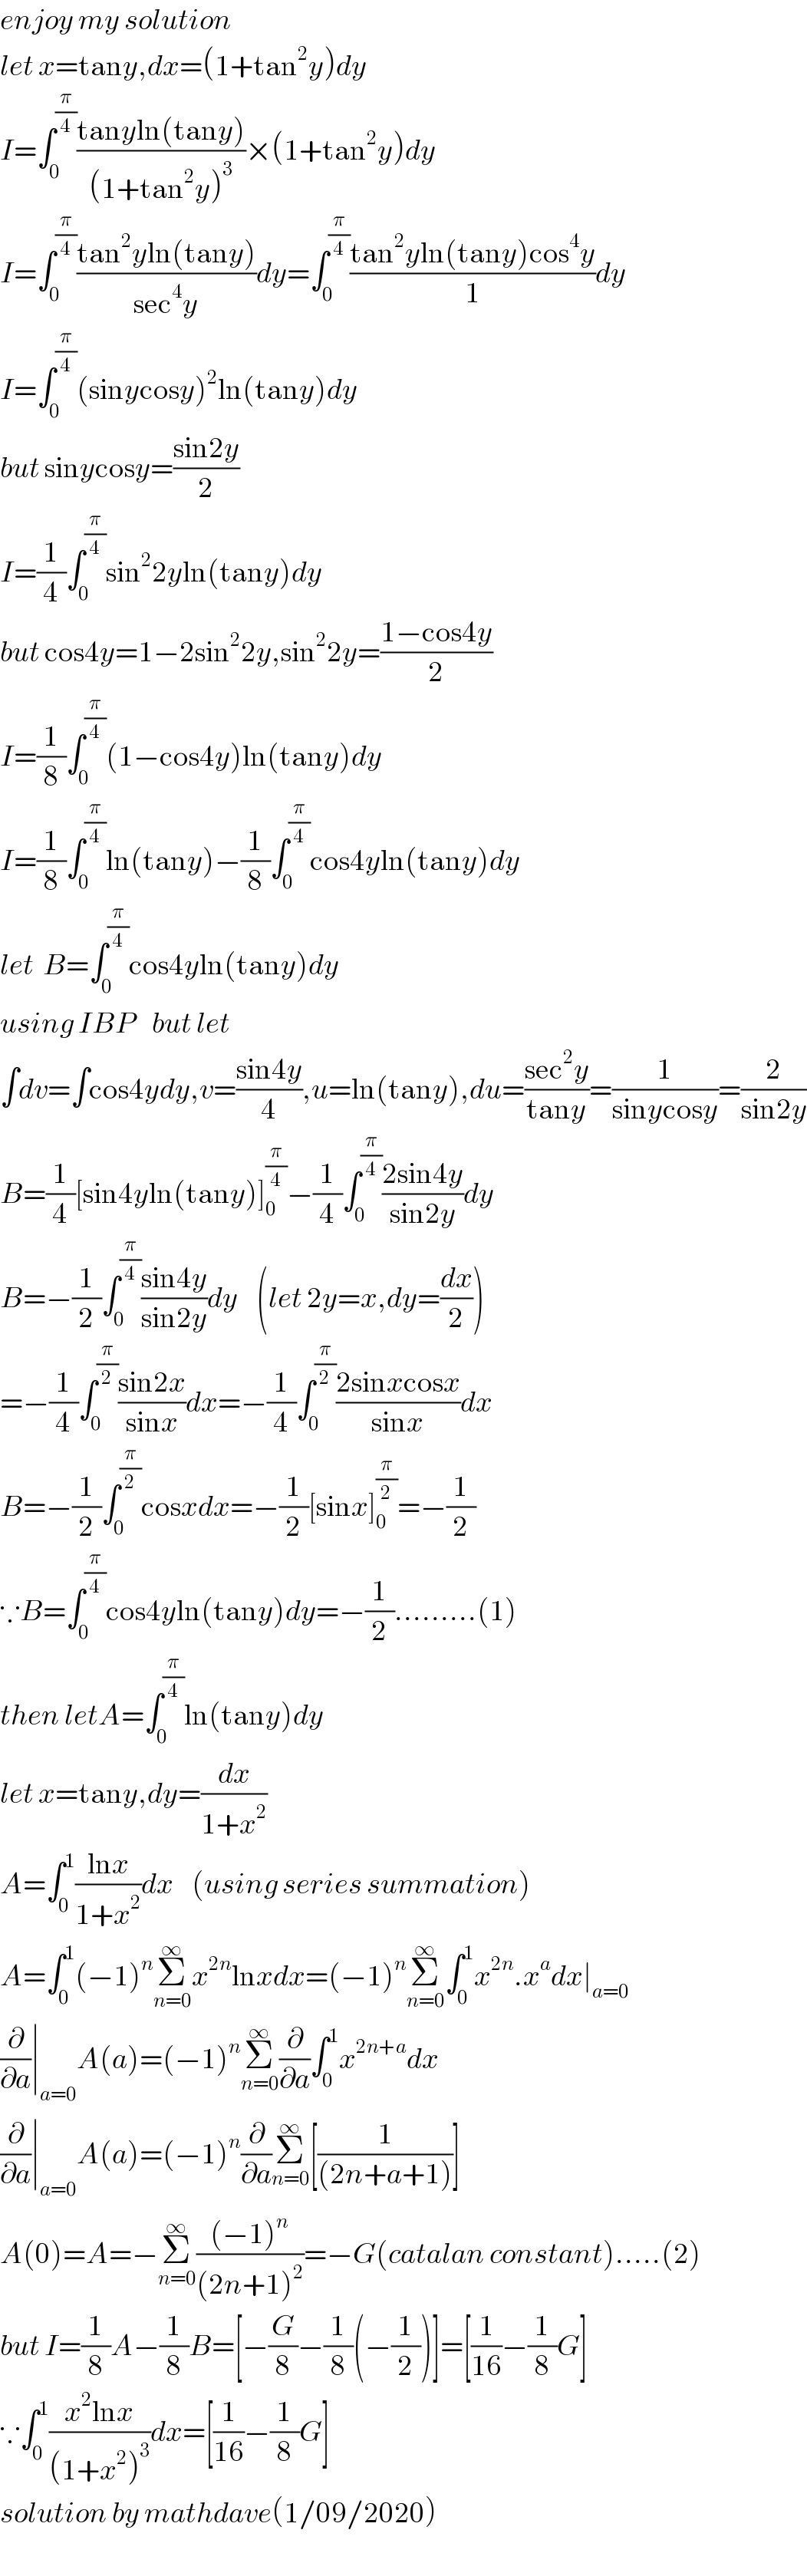 enjoy my solution   let x=tany,dx=(1+tan^2 y)dy  I=∫_0 ^(π/4) ((tanyln(tany))/((1+tan^2 y)^3 ))×(1+tan^2 y)dy  I=∫_0 ^(π/4) ((tan^2 yln(tany))/(sec^4 y))dy=∫_0 ^(π/4) ((tan^2 yln(tany)cos^4 y)/1)dy  I=∫_0 ^(π/4) (sinycosy)^2 ln(tany)dy  but sinycosy=((sin2y)/2)  I=(1/4)∫_0 ^(π/4) sin^2 2yln(tany)dy  but cos4y=1−2sin^2 2y,sin^2 2y=((1−cos4y)/2)  I=(1/8)∫_0 ^(π/4) (1−cos4y)ln(tany)dy  I=(1/8)∫_0 ^(π/4) ln(tany)−(1/8)∫_0 ^(π/4) cos4yln(tany)dy  let  B=∫_0 ^(π/4) cos4yln(tany)dy  using IBP    but let   ∫dv=∫cos4ydy,v=((sin4y)/4),u=ln(tany),du=((sec^2 y)/(tany))=(1/(sinycosy))=(2/(sin2y))  B=(1/4)[sin4yln(tany)]_0 ^(π/4) −(1/4)∫_0 ^(π/4) ((2sin4y)/(sin2y))dy  B=−(1/2)∫_0 ^(π/4) ((sin4y)/(sin2y))dy    (let 2y=x,dy=(dx/2))  =−(1/4)∫_0 ^(π/2) ((sin2x)/(sinx))dx=−(1/4)∫_0 ^(π/2) ((2sinxcosx)/(sinx))dx  B=−(1/2)∫_0 ^(π/2) cosxdx=−(1/2)[sinx]_0 ^(π/2) =−(1/2)  ∵B=∫_0 ^(π/4) cos4yln(tany)dy=−(1/2).........(1)  then letA=∫_0 ^(π/4) ln(tany)dy  let x=tany,dy=(dx/(1+x^2 ))  A=∫_0 ^1 ((lnx)/(1+x^2 ))dx    (using series summation)  A=∫_0 ^1 (−1)^n Σ_(n=0) ^∞ x^(2n) lnxdx=(−1)^n Σ_(n=0) ^∞ ∫_0 ^1 x^(2n) .x^a dx∣_(a=0)   (∂/∂a)∣_(a=0) A(a)=(−1)^n Σ_(n=0) ^∞ (∂/∂a)∫_0 ^1 x^(2n+a) dx  (∂/∂a)∣_(a=0) A(a)=(−1)^n (∂/∂a)Σ_(n=0) ^∞ [(1/((2n+a+1)))]  A(0)=A=−Σ_(n=0) ^∞ (((−1)^n )/((2n+1)^2 ))=−G(catalan constant).....(2)  but I=(1/8)A−(1/8)B=[−(G/8)−(1/8)(−(1/2))]=[(1/(16))−(1/8)G]  ∵∫_0 ^1 ((x^2 lnx)/((1+x^2 )^3 ))dx=[(1/(16))−(1/8)G]  solution by mathdave(1/09/2020)  